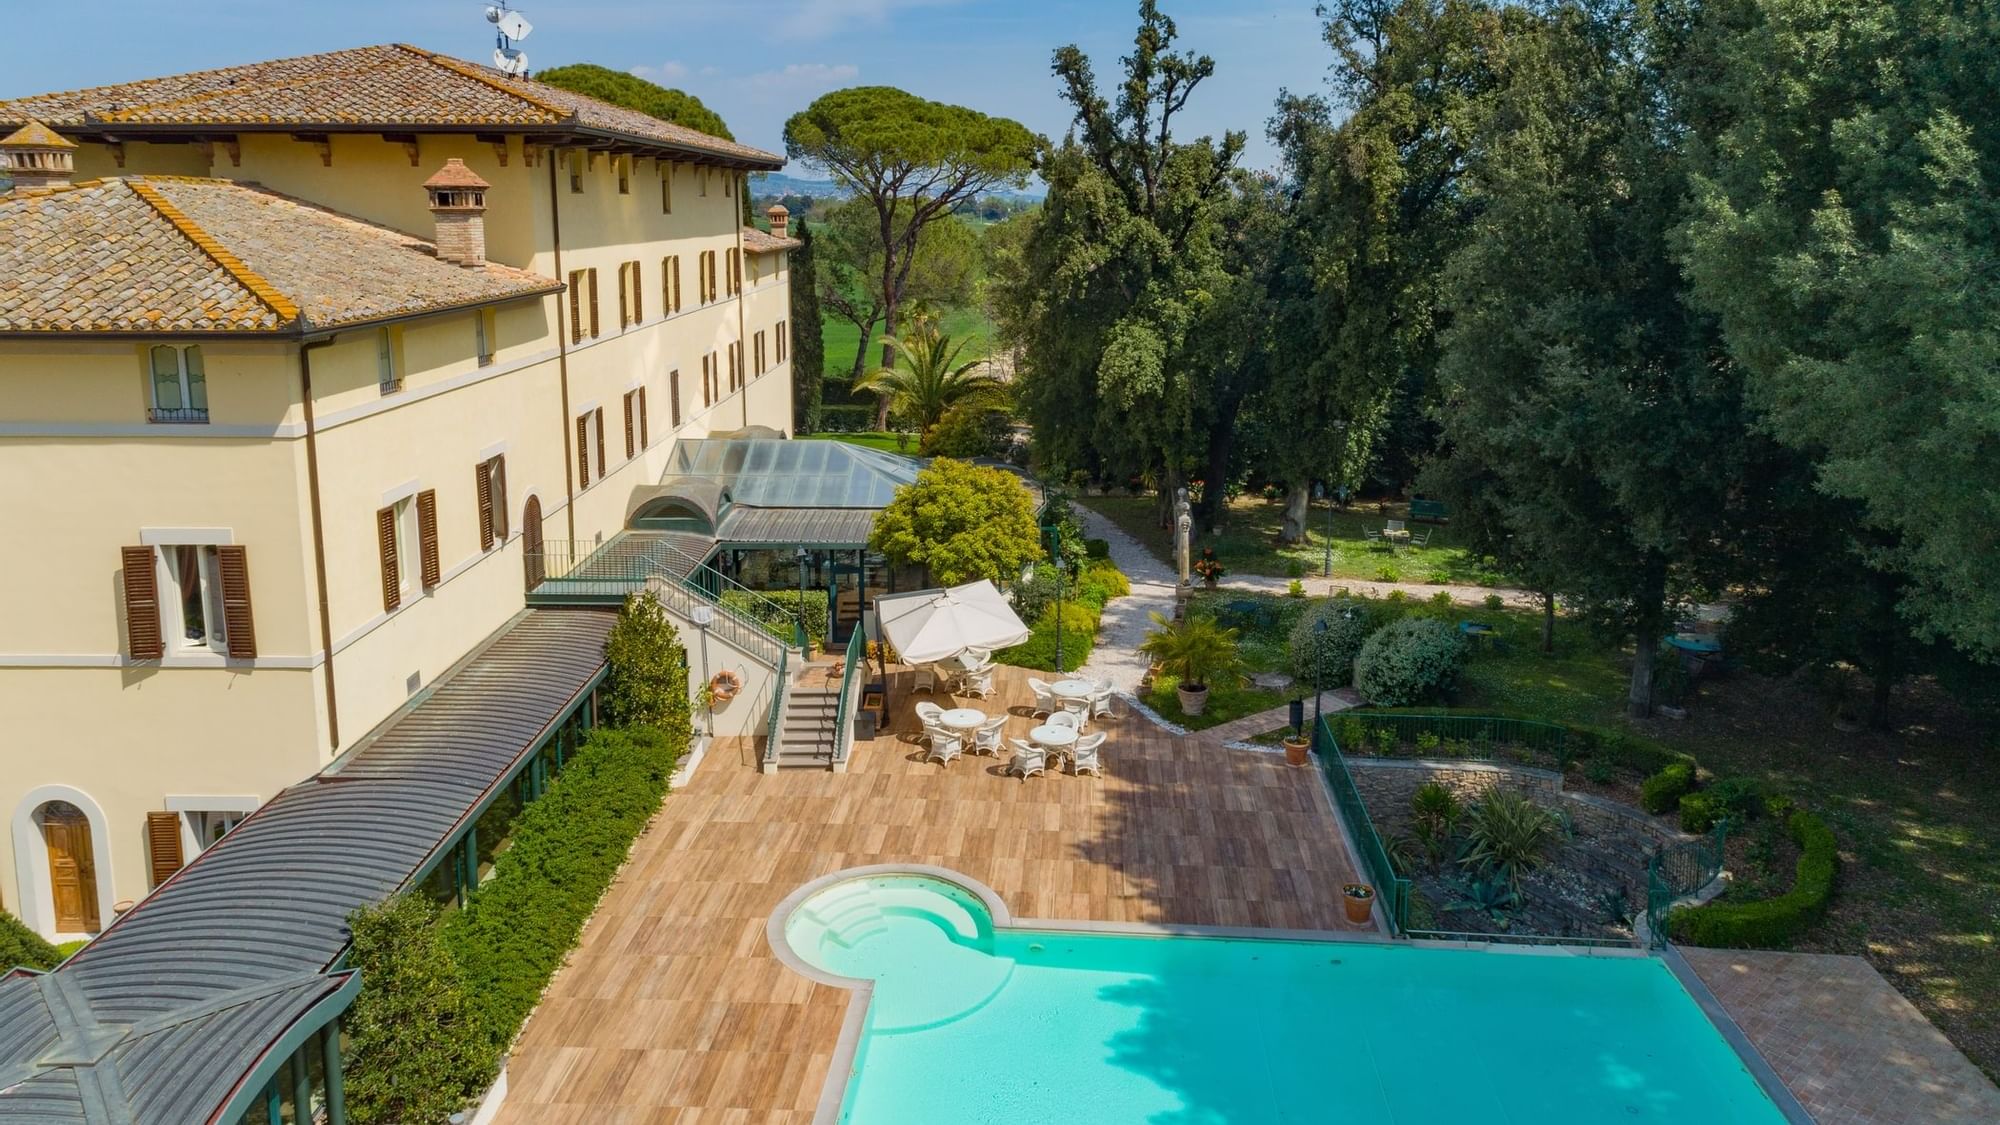 Villa storica con piscina a Perugia, in Umbria